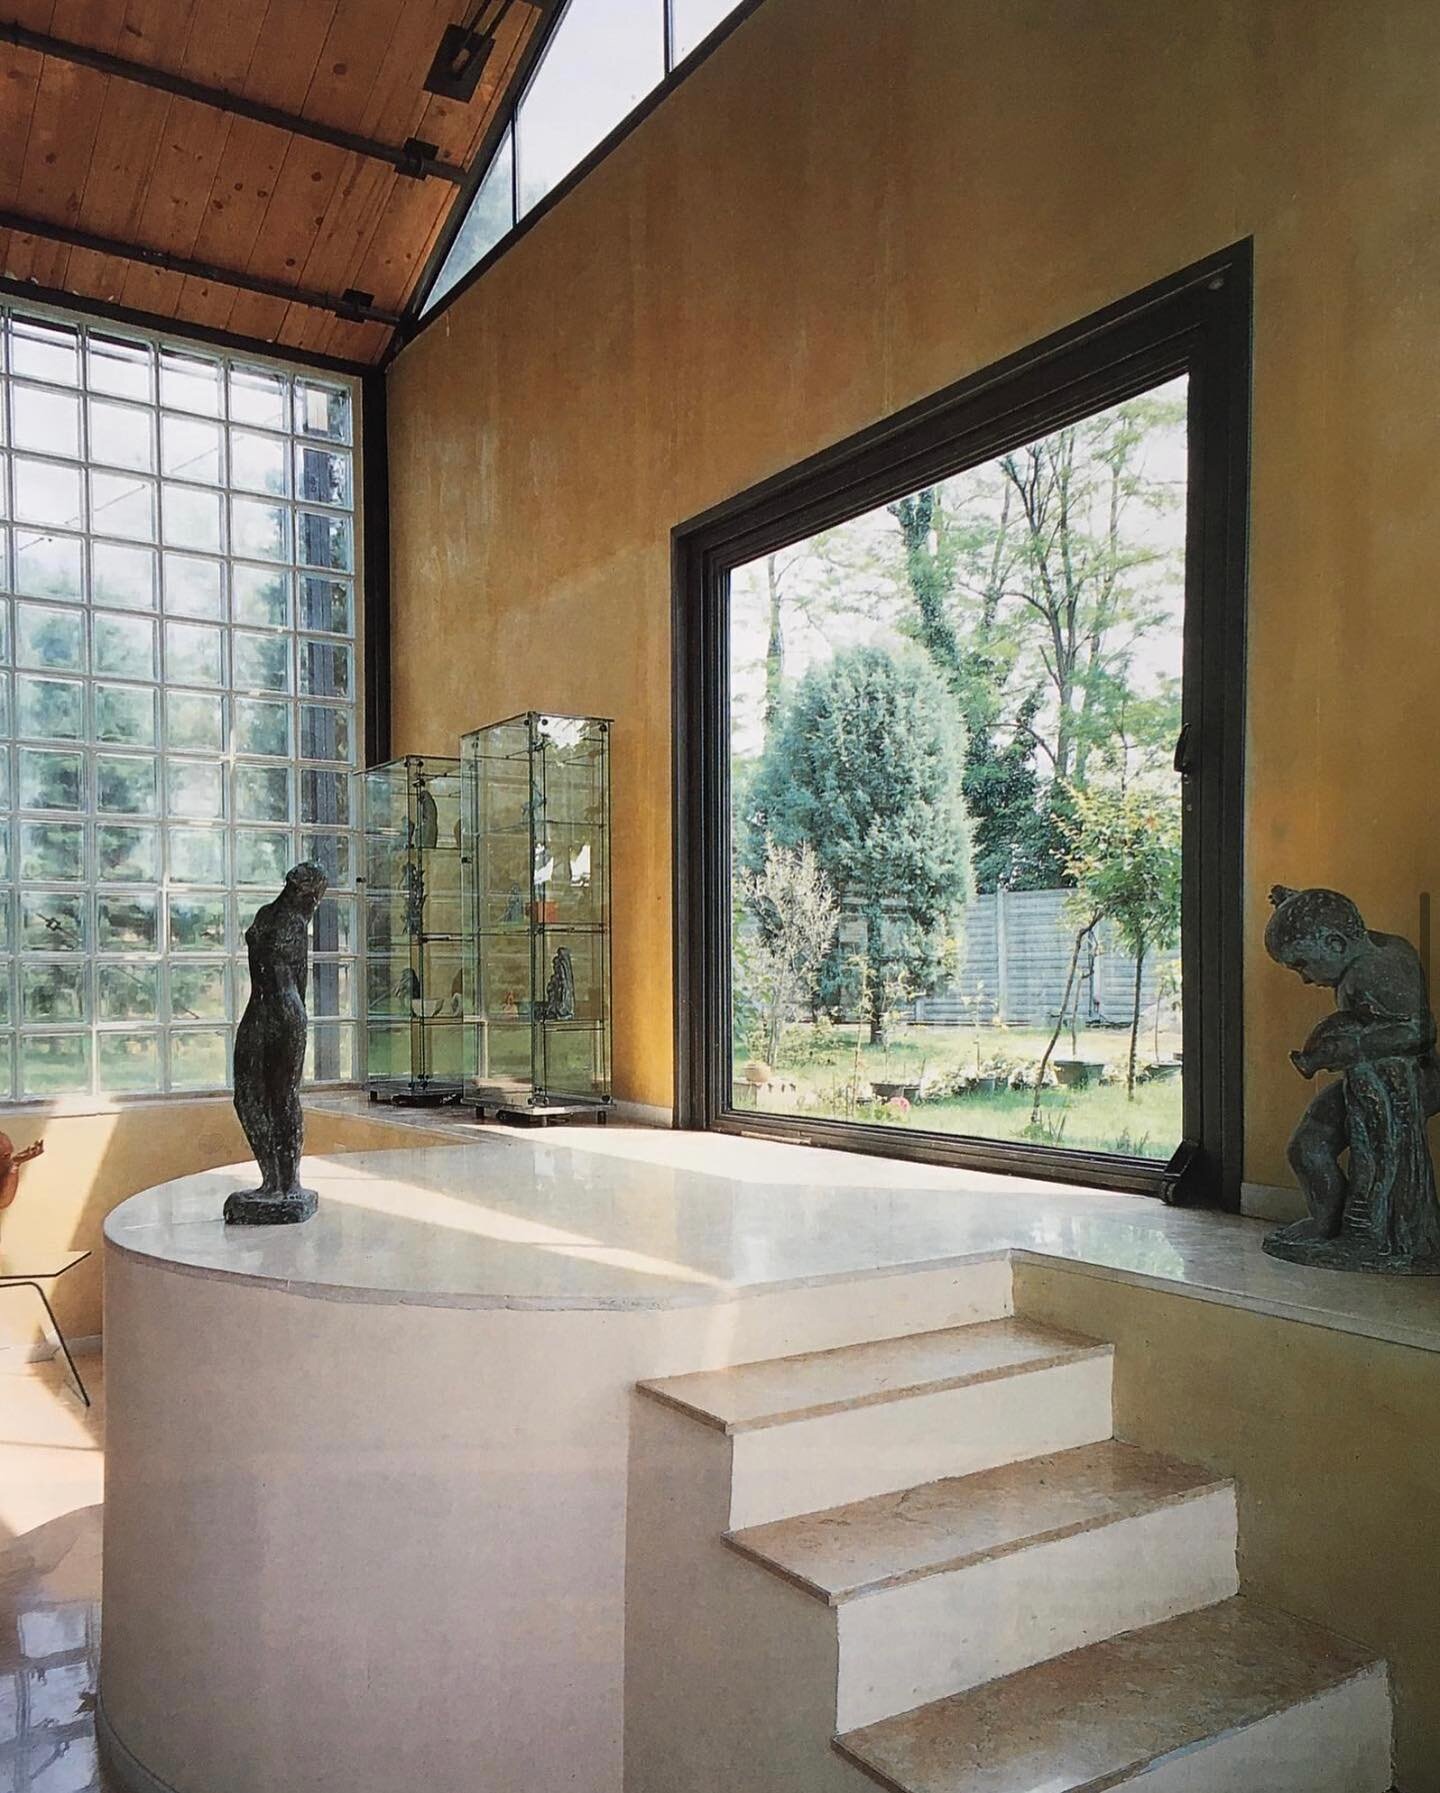 interior by Serena Omodeo Sal&egrave; &amp; Thomas Becker
.
.
.
.
.
.
.
.
#interior #milan #serenaomodeosale #thomasbecier #milan #design #interiordesign #kellybehunstudio #casavogue via @inside_values